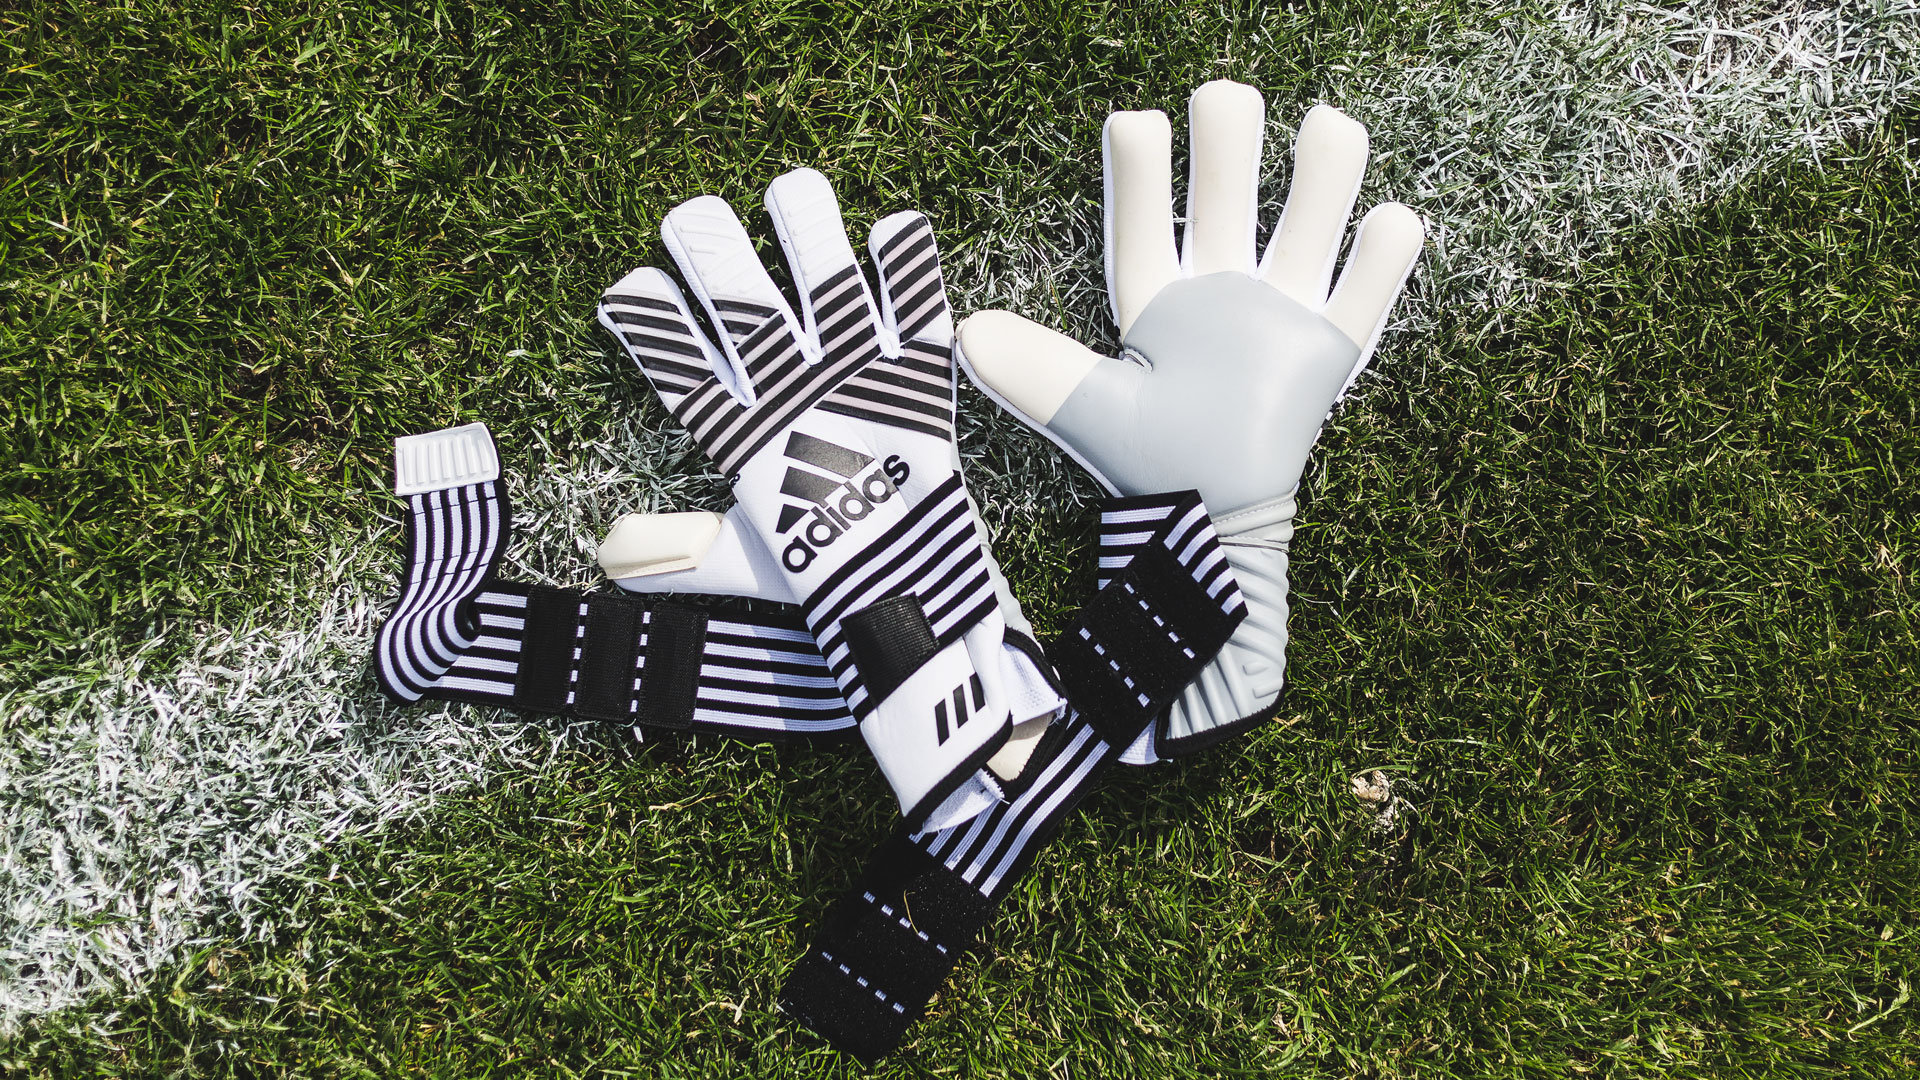 adidas ace transition pro goalkeeper gloves